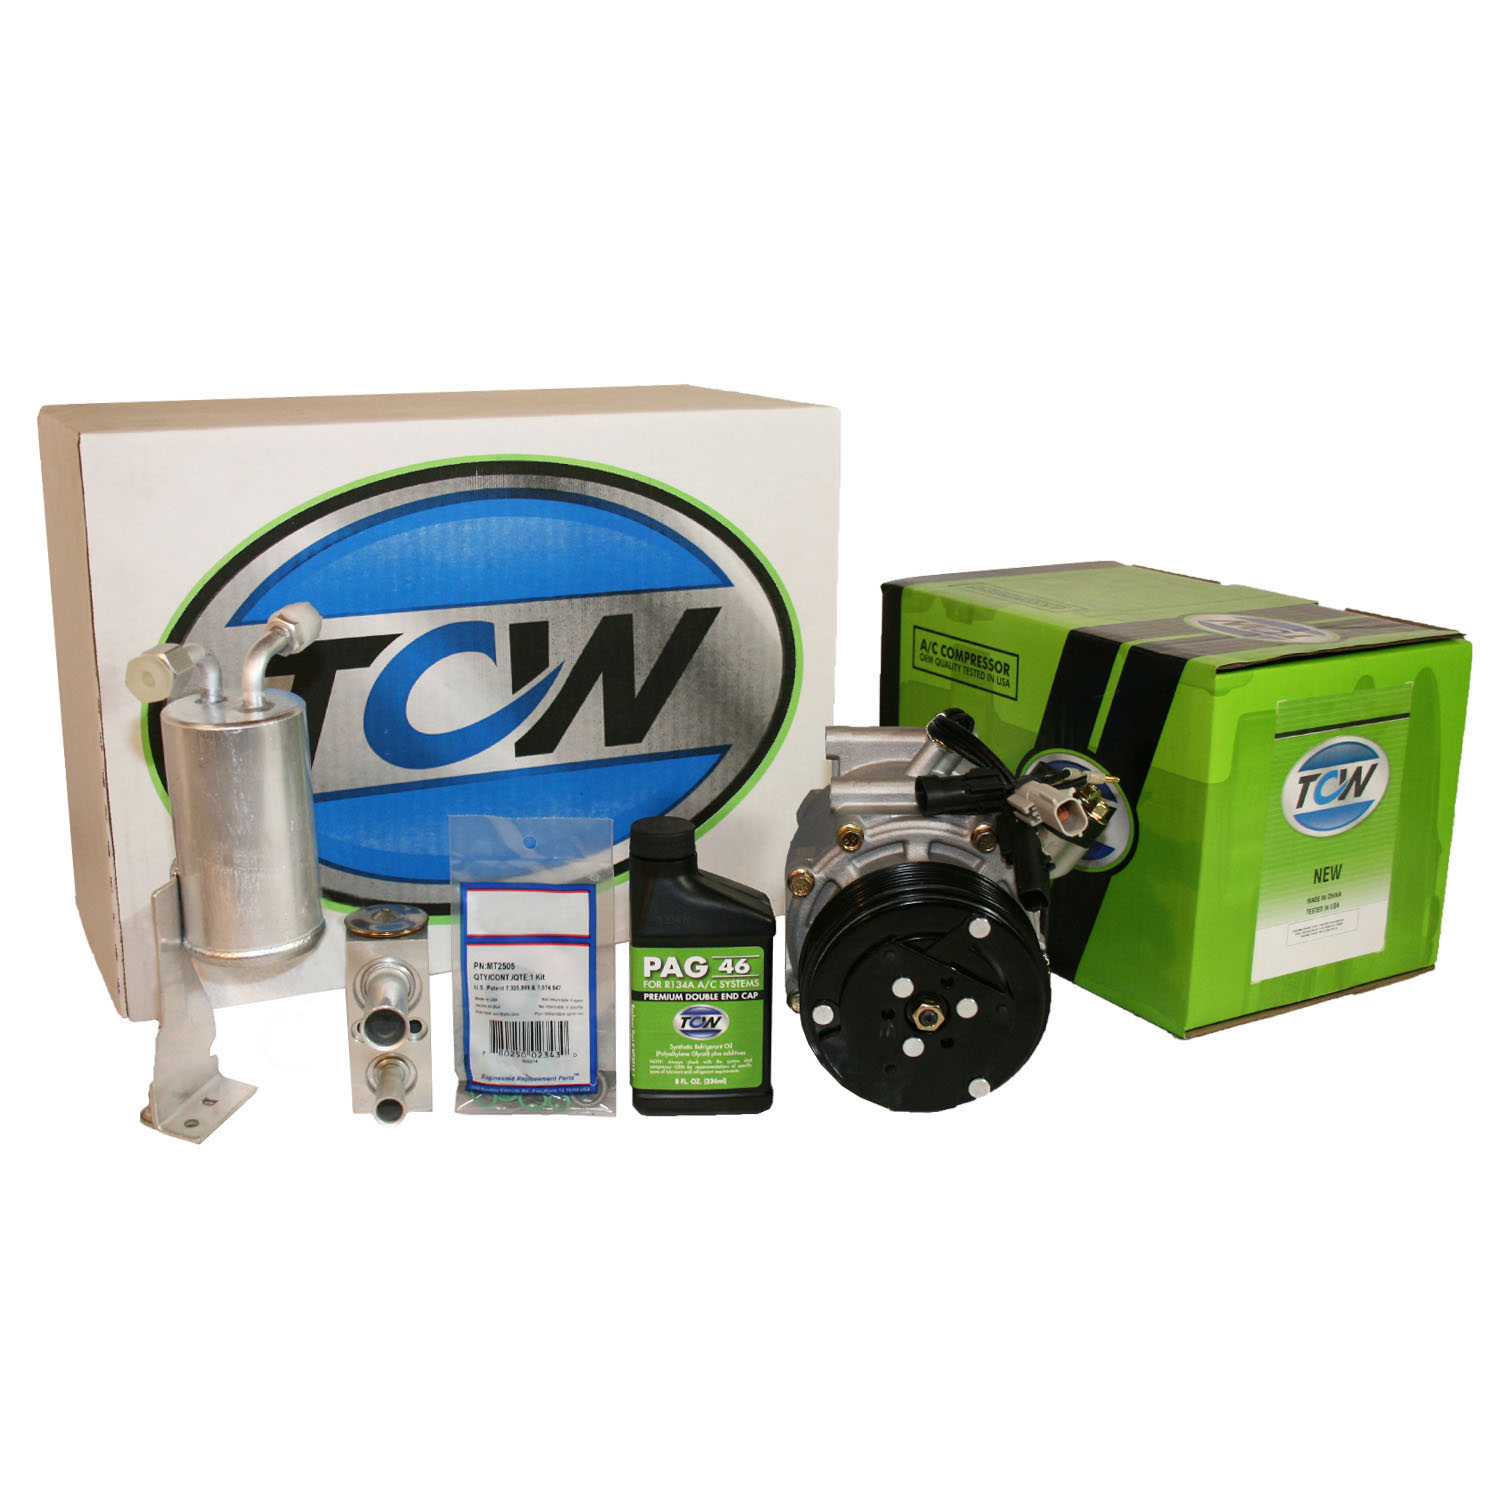 TCW Vehicle A/C Kit K1000465N New Product Image field_60b6a13a6e67c